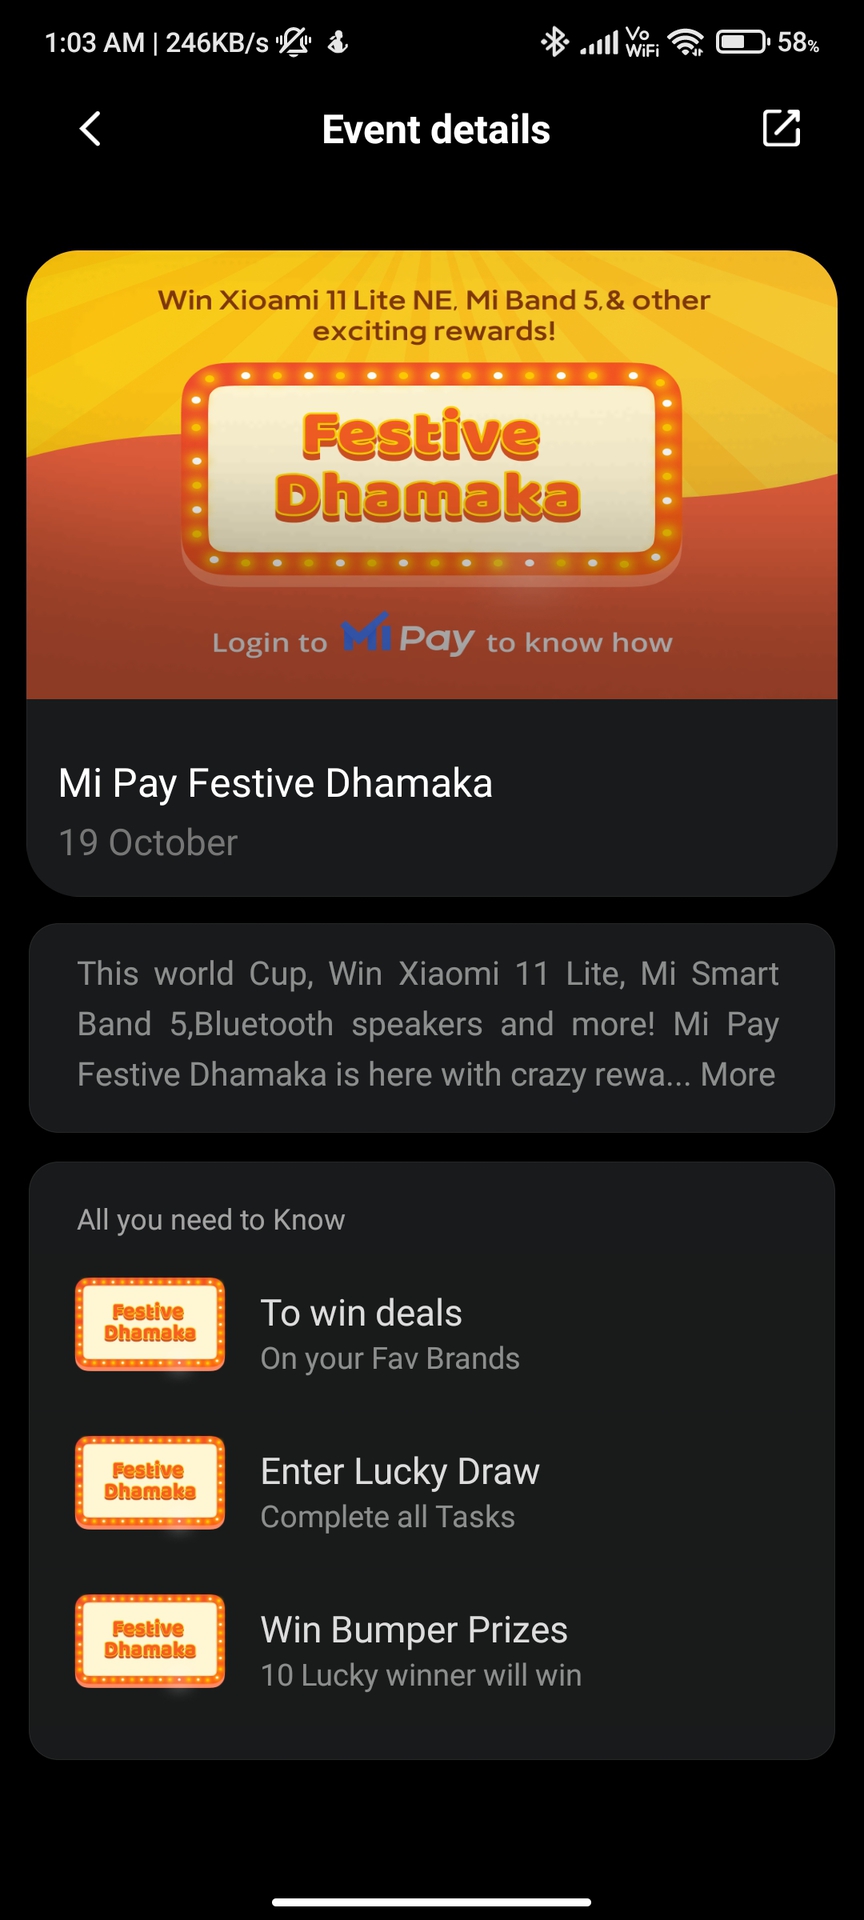 Mi 11x calendar ad showing details of Mi Pay promotion